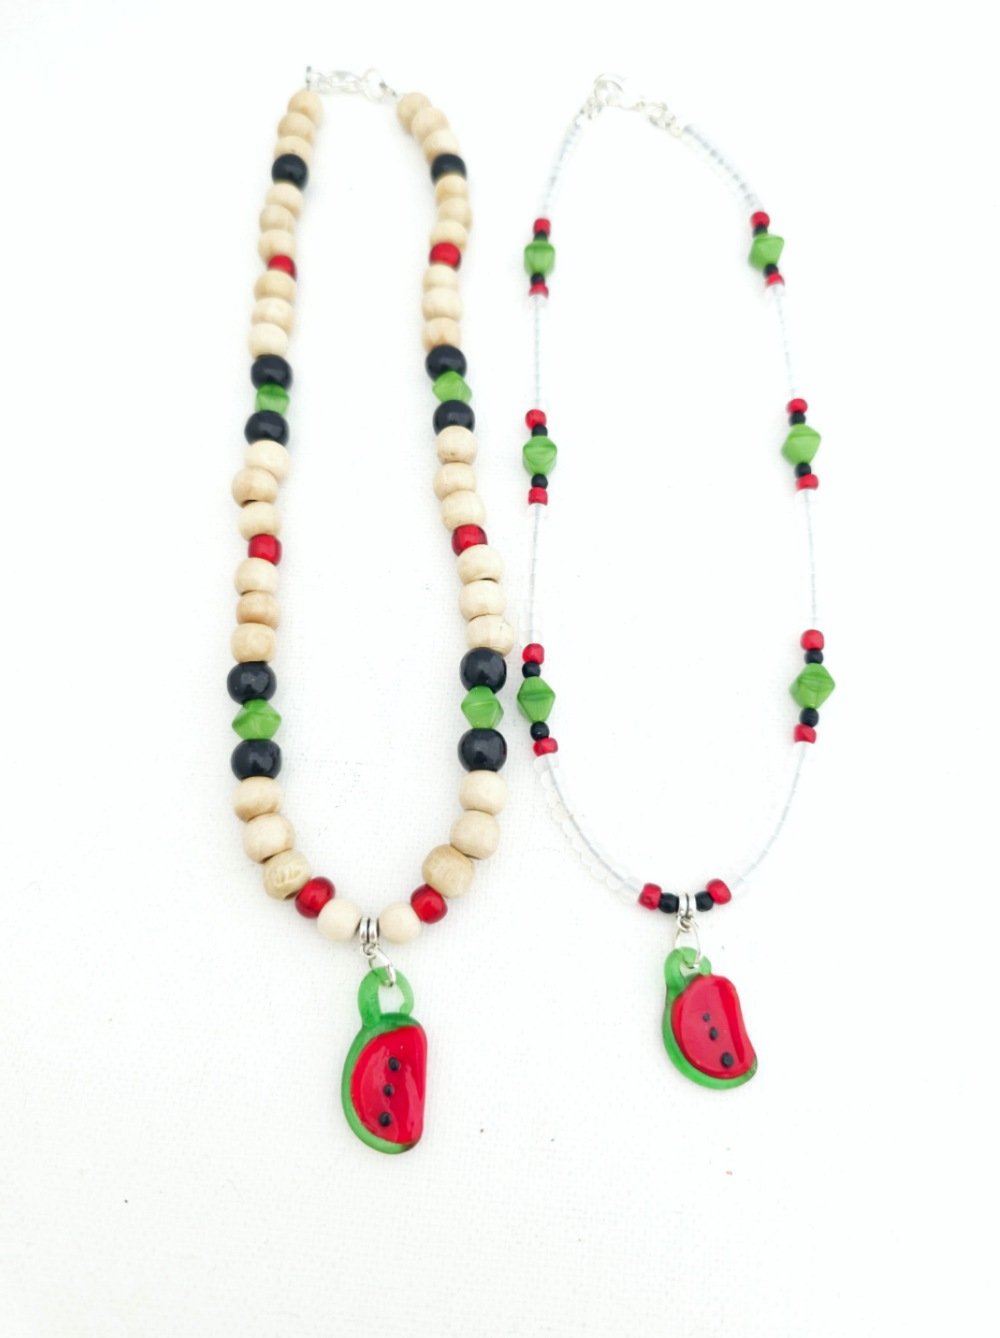 Watermelon necklaces